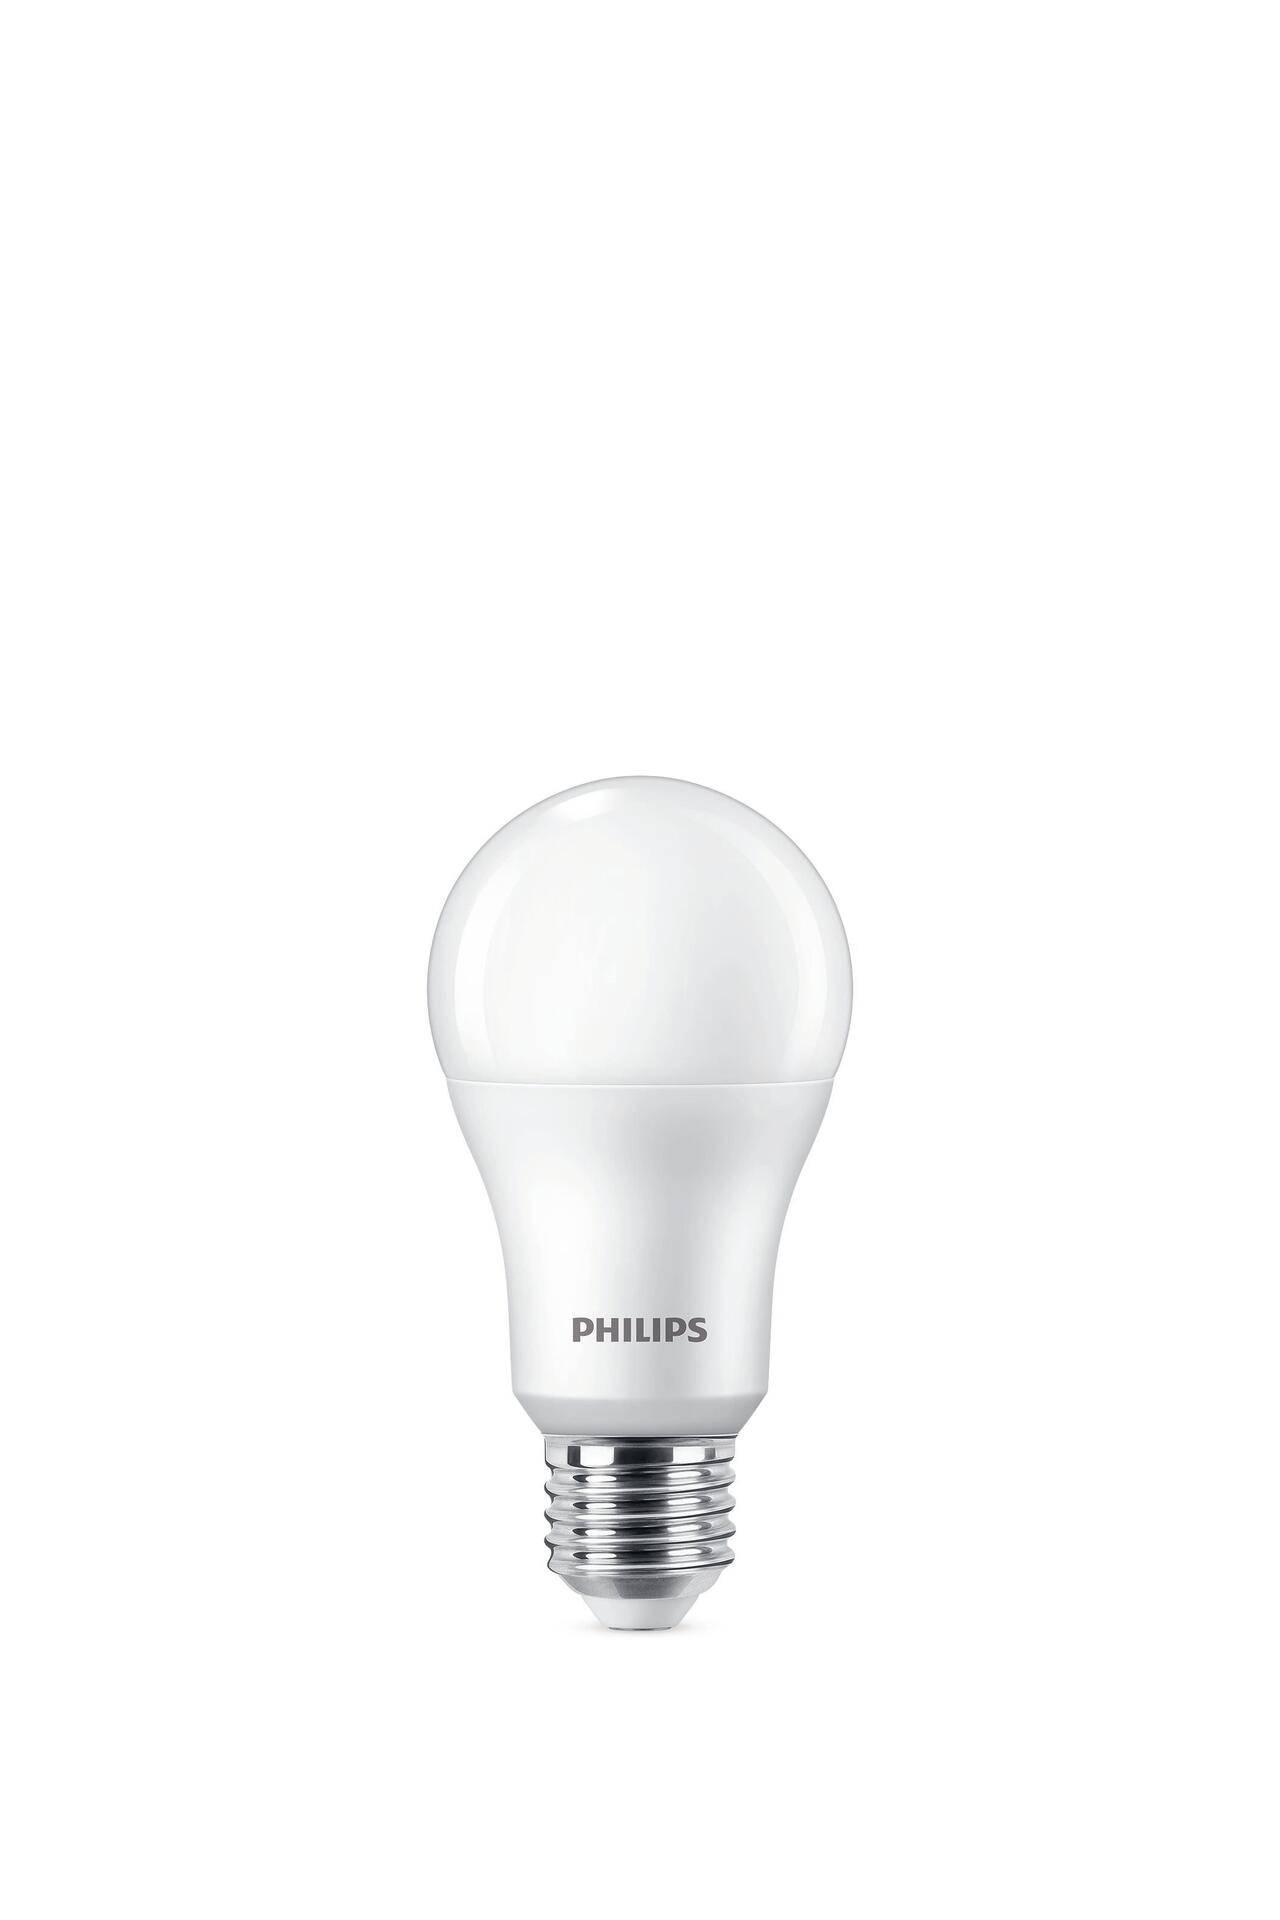 Pachet dublu de becuri cu LED Philips 13-100W E27 827 mat 1521lm 2700K